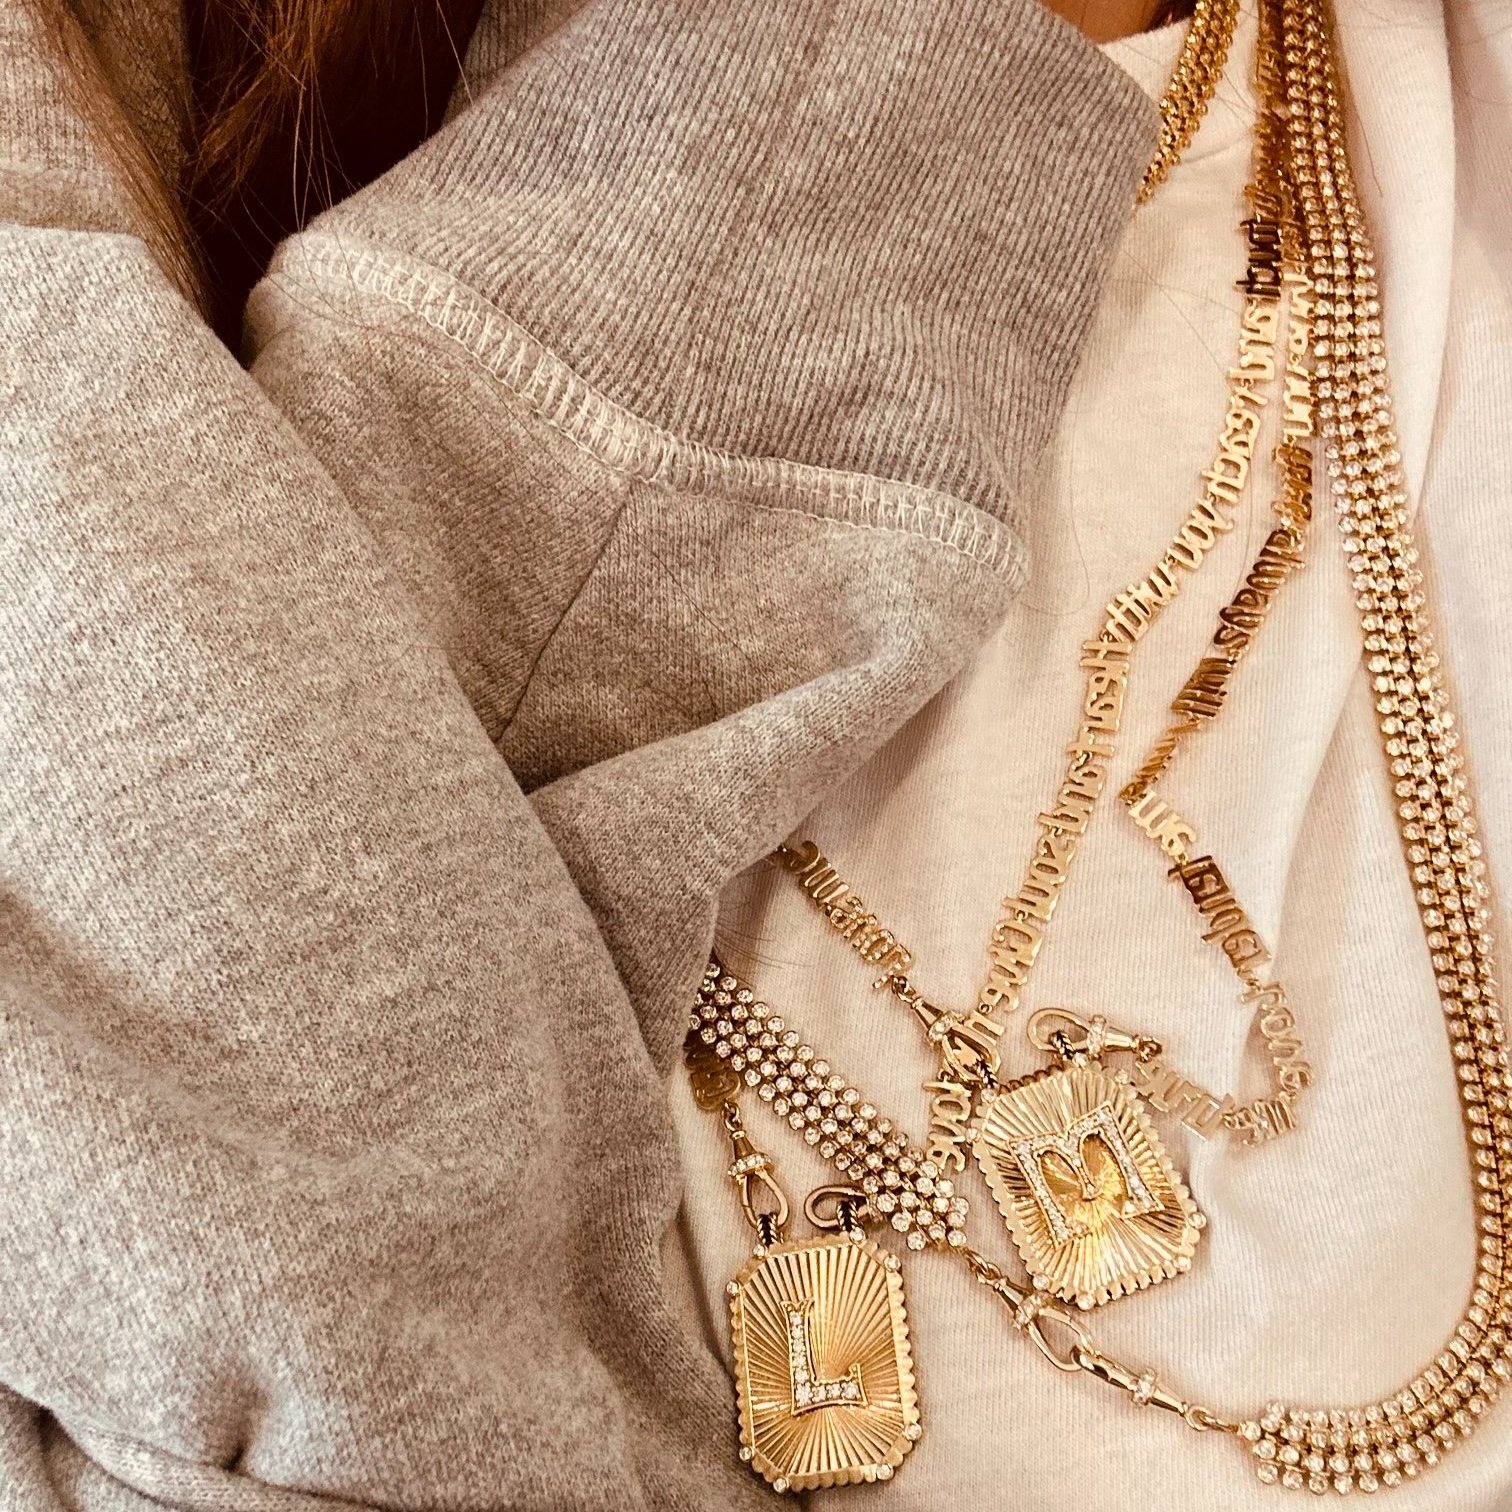 Marie's everyday jewelry: her custom diamond letter scapulars